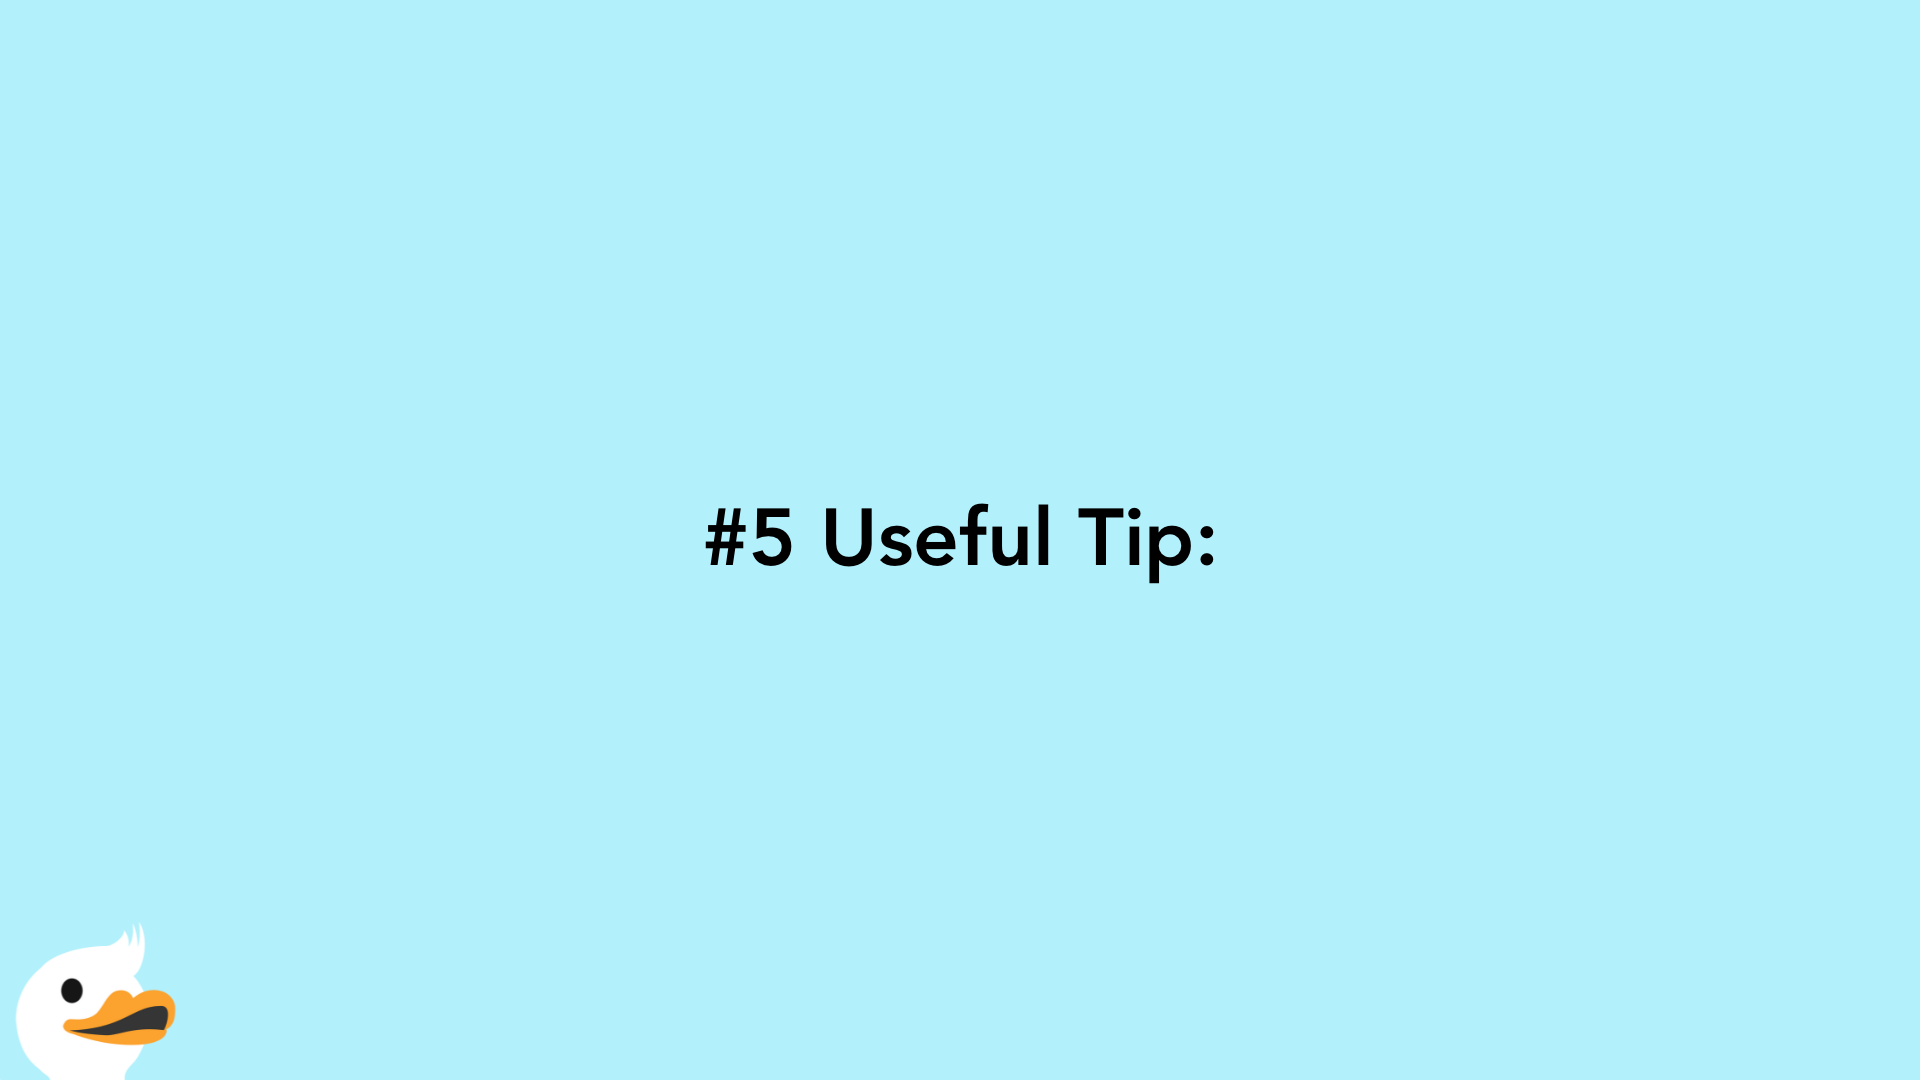 #5 Useful Tip: